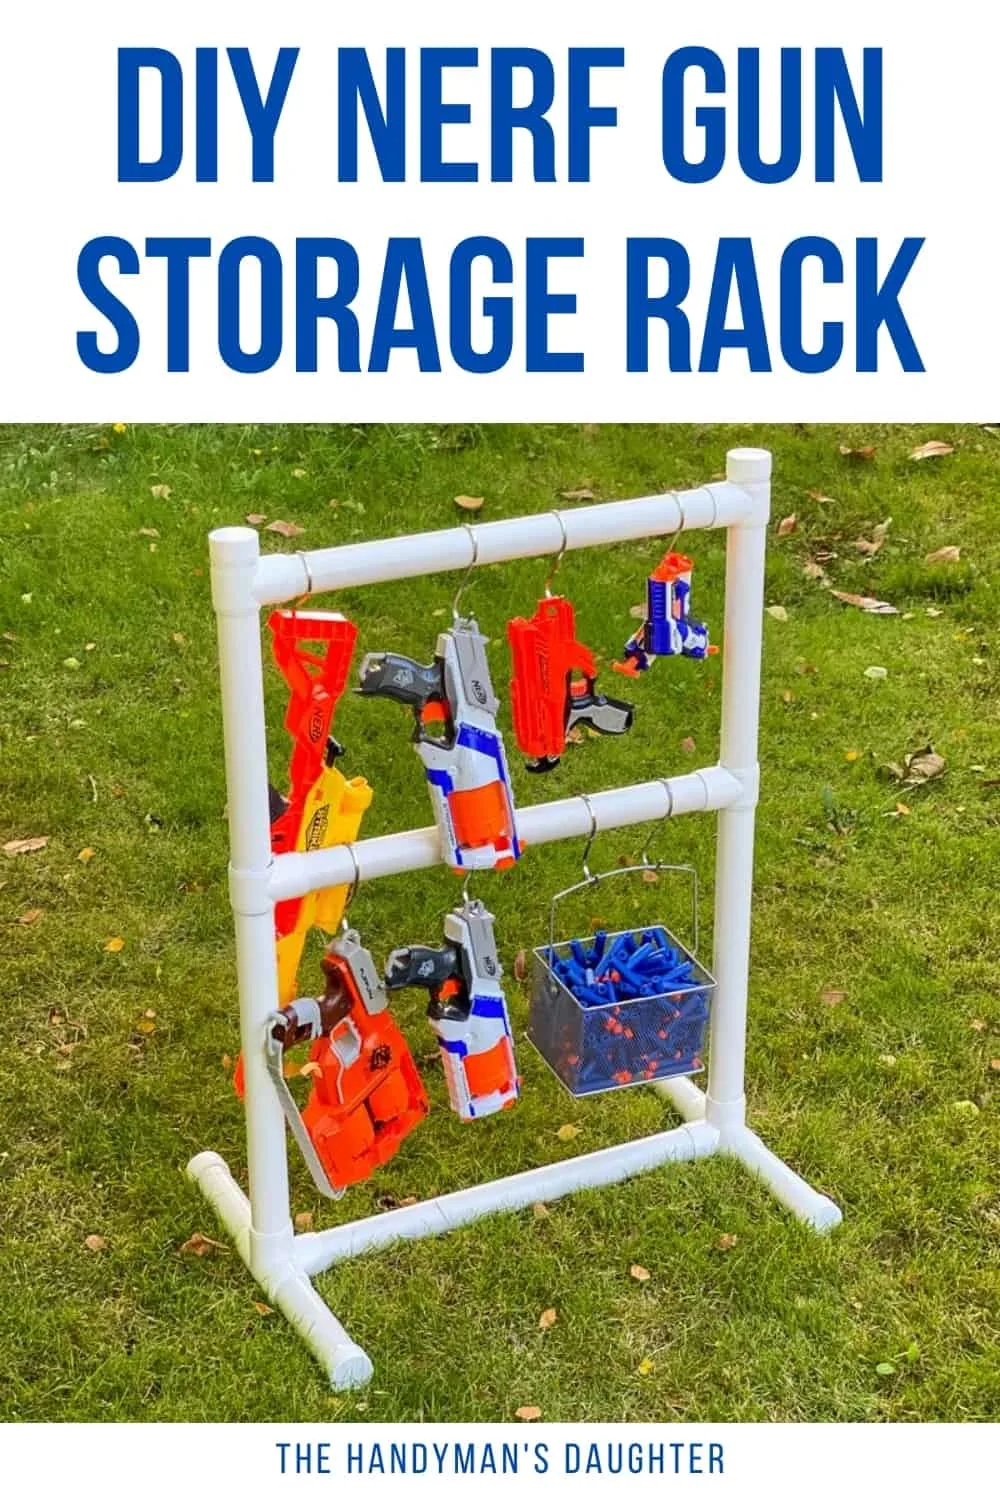 Easy DIY Nerf gun storage rack with basket for darts